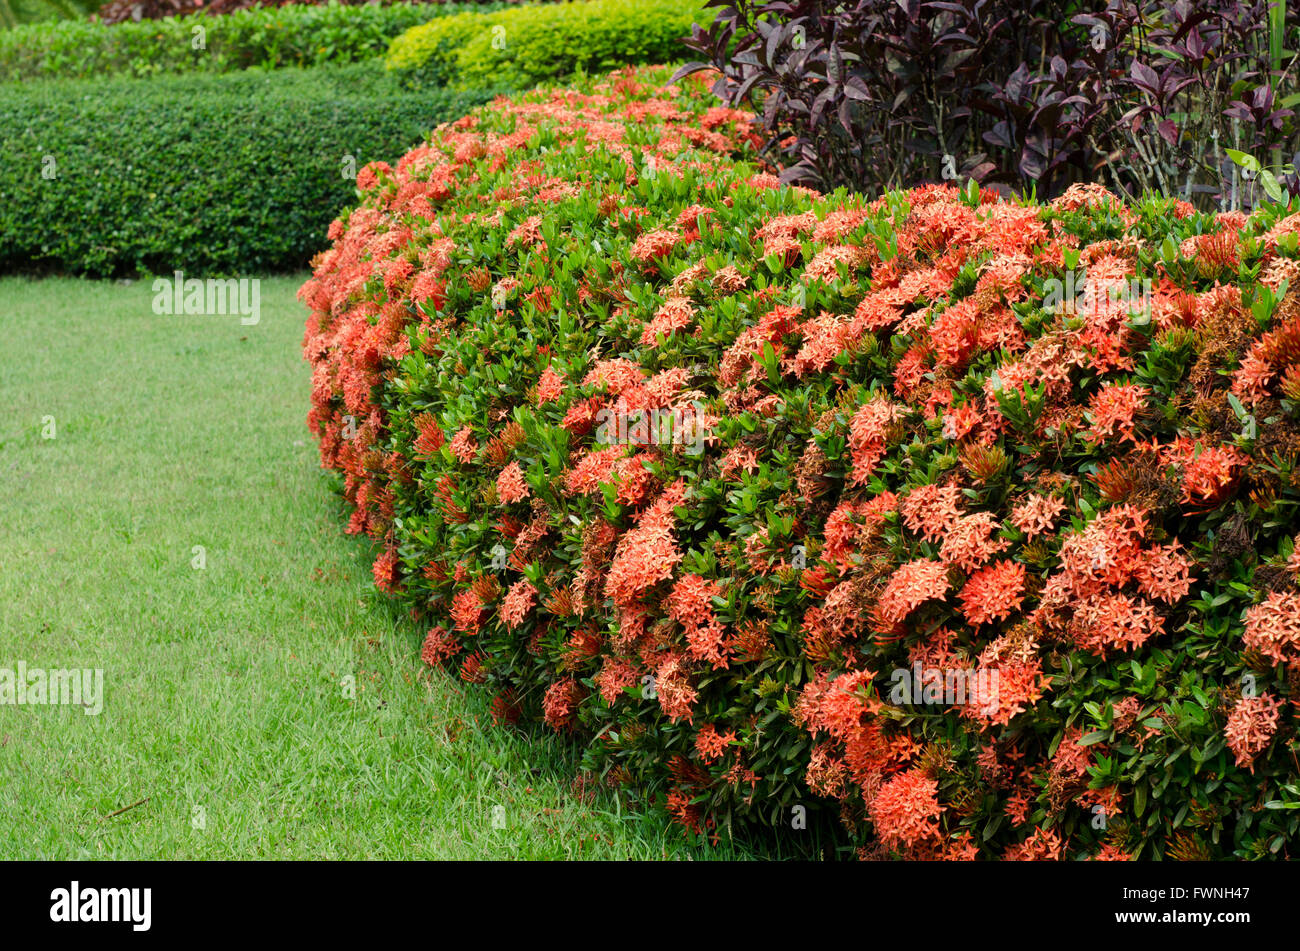 Ixora garden hi-res stock photography and images - Alamy